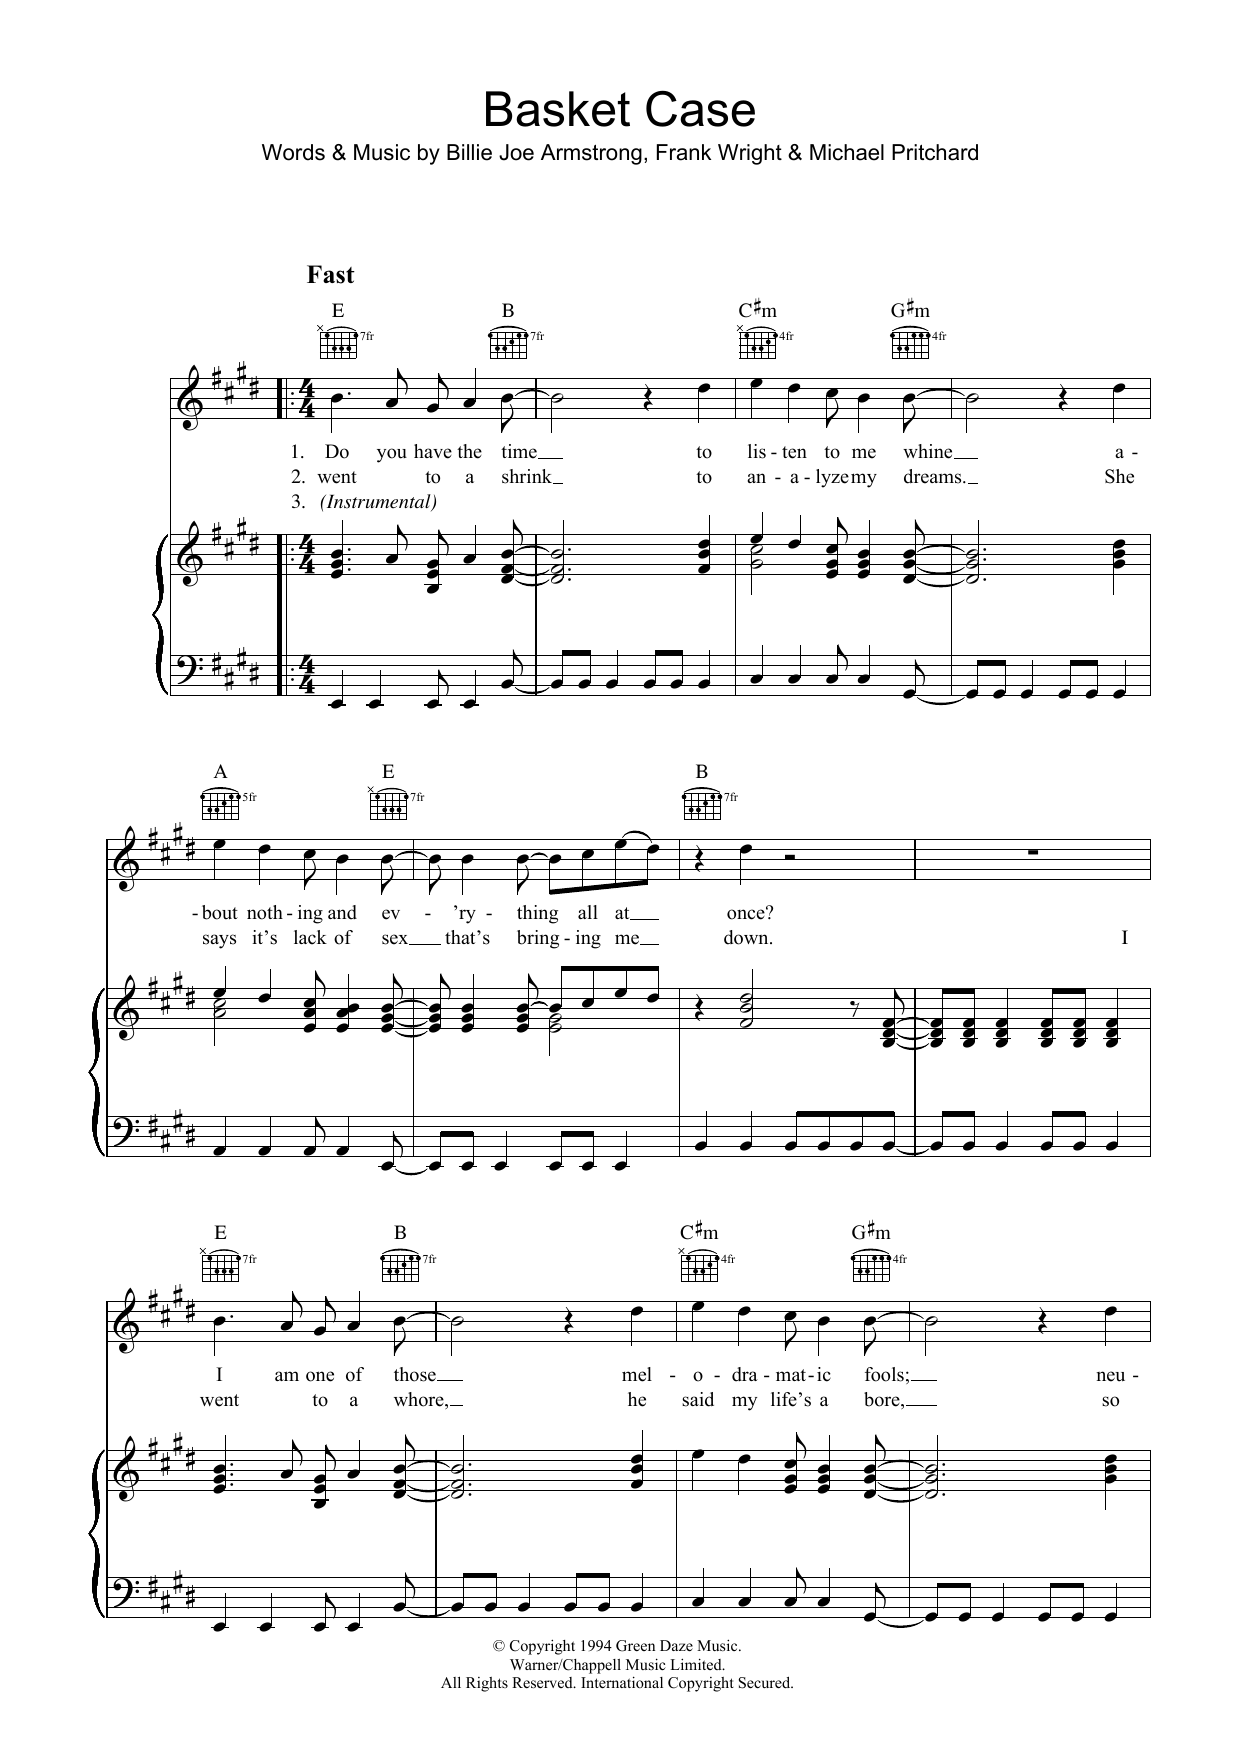 Green Day Basket Case Sheet Music Notes & Chords for Drums Transcription - Download or Print PDF